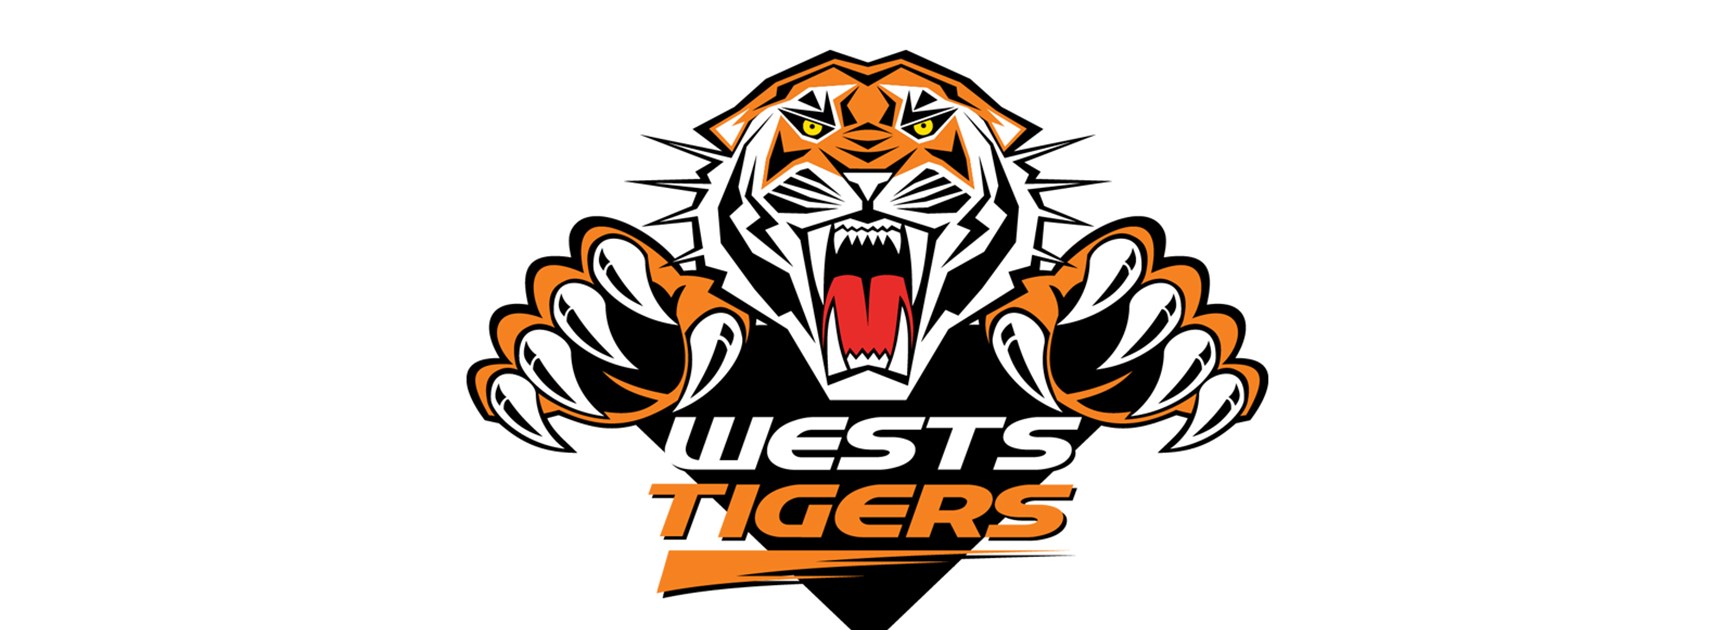 Wests Tigers logo.